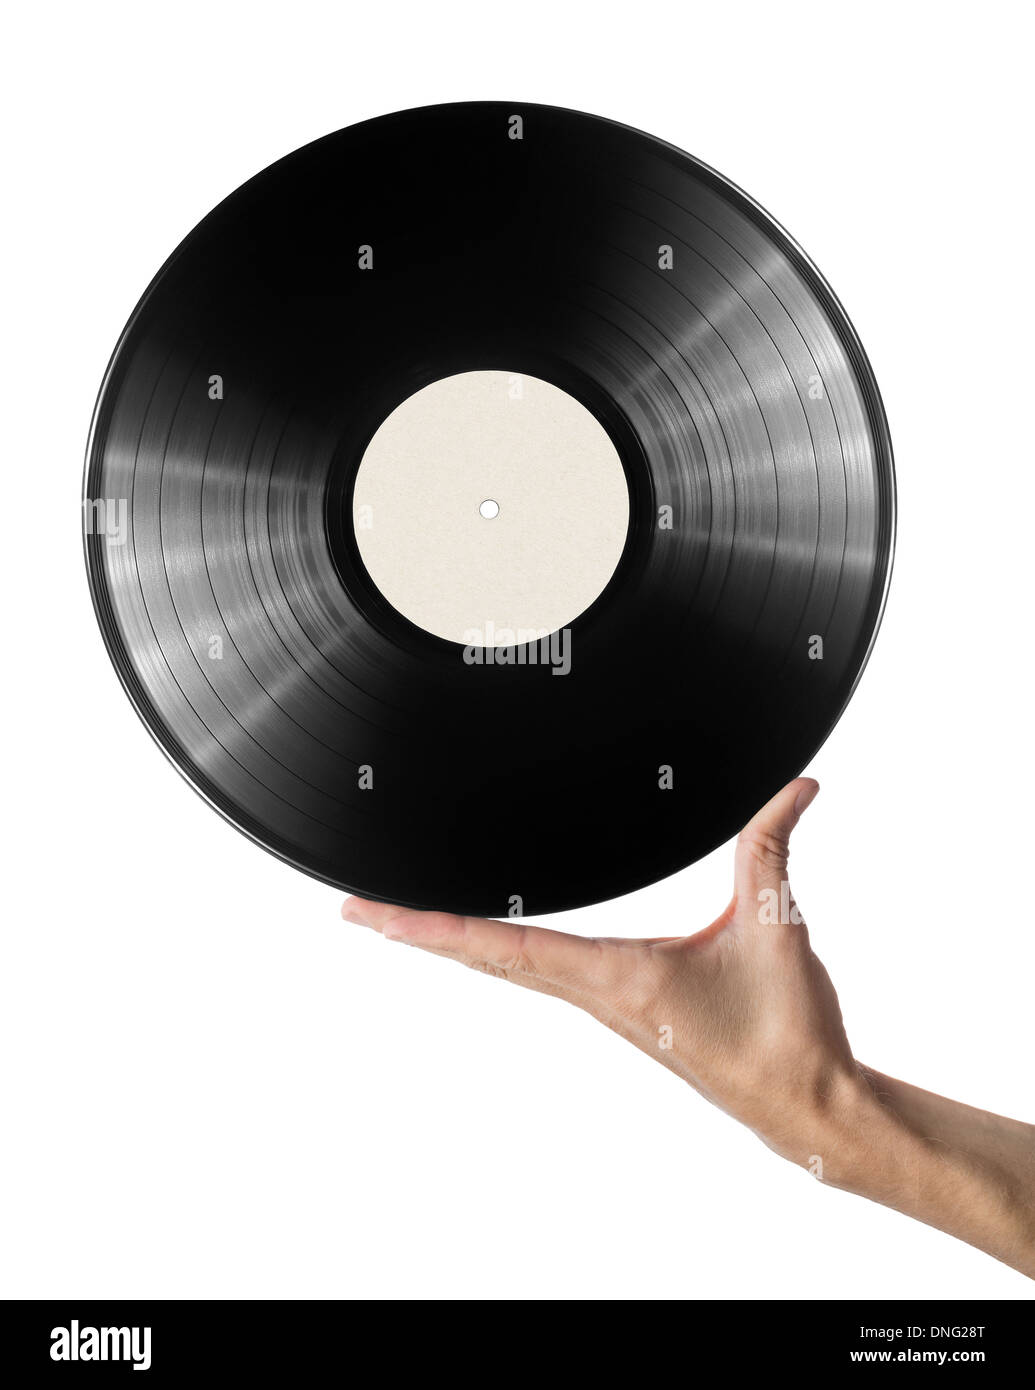 Disco lp de vinilo de gramófono con etiqueta blanca vacía. disco de álbum  de larga duración musical negro aislado sobre fondo blanco. ilustración  vectorial realista 3d